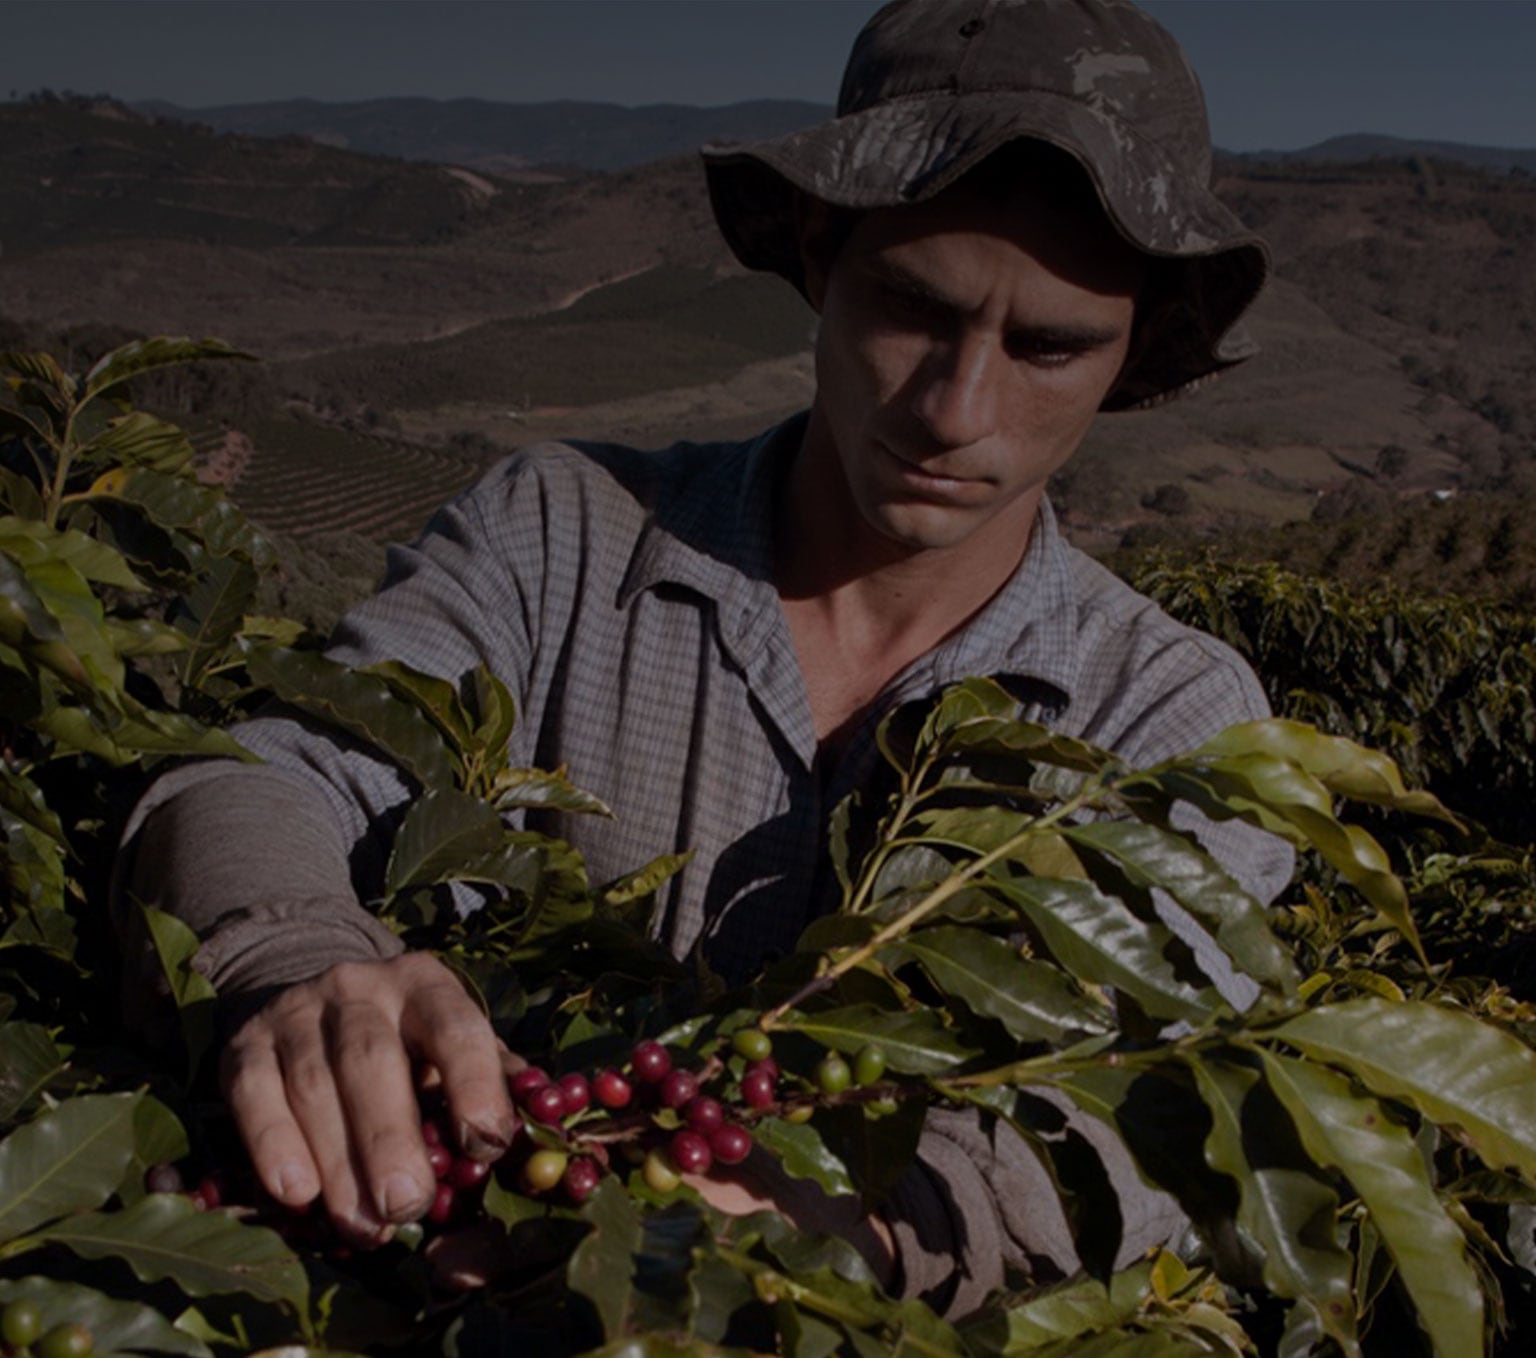 Life of a coffee farmer